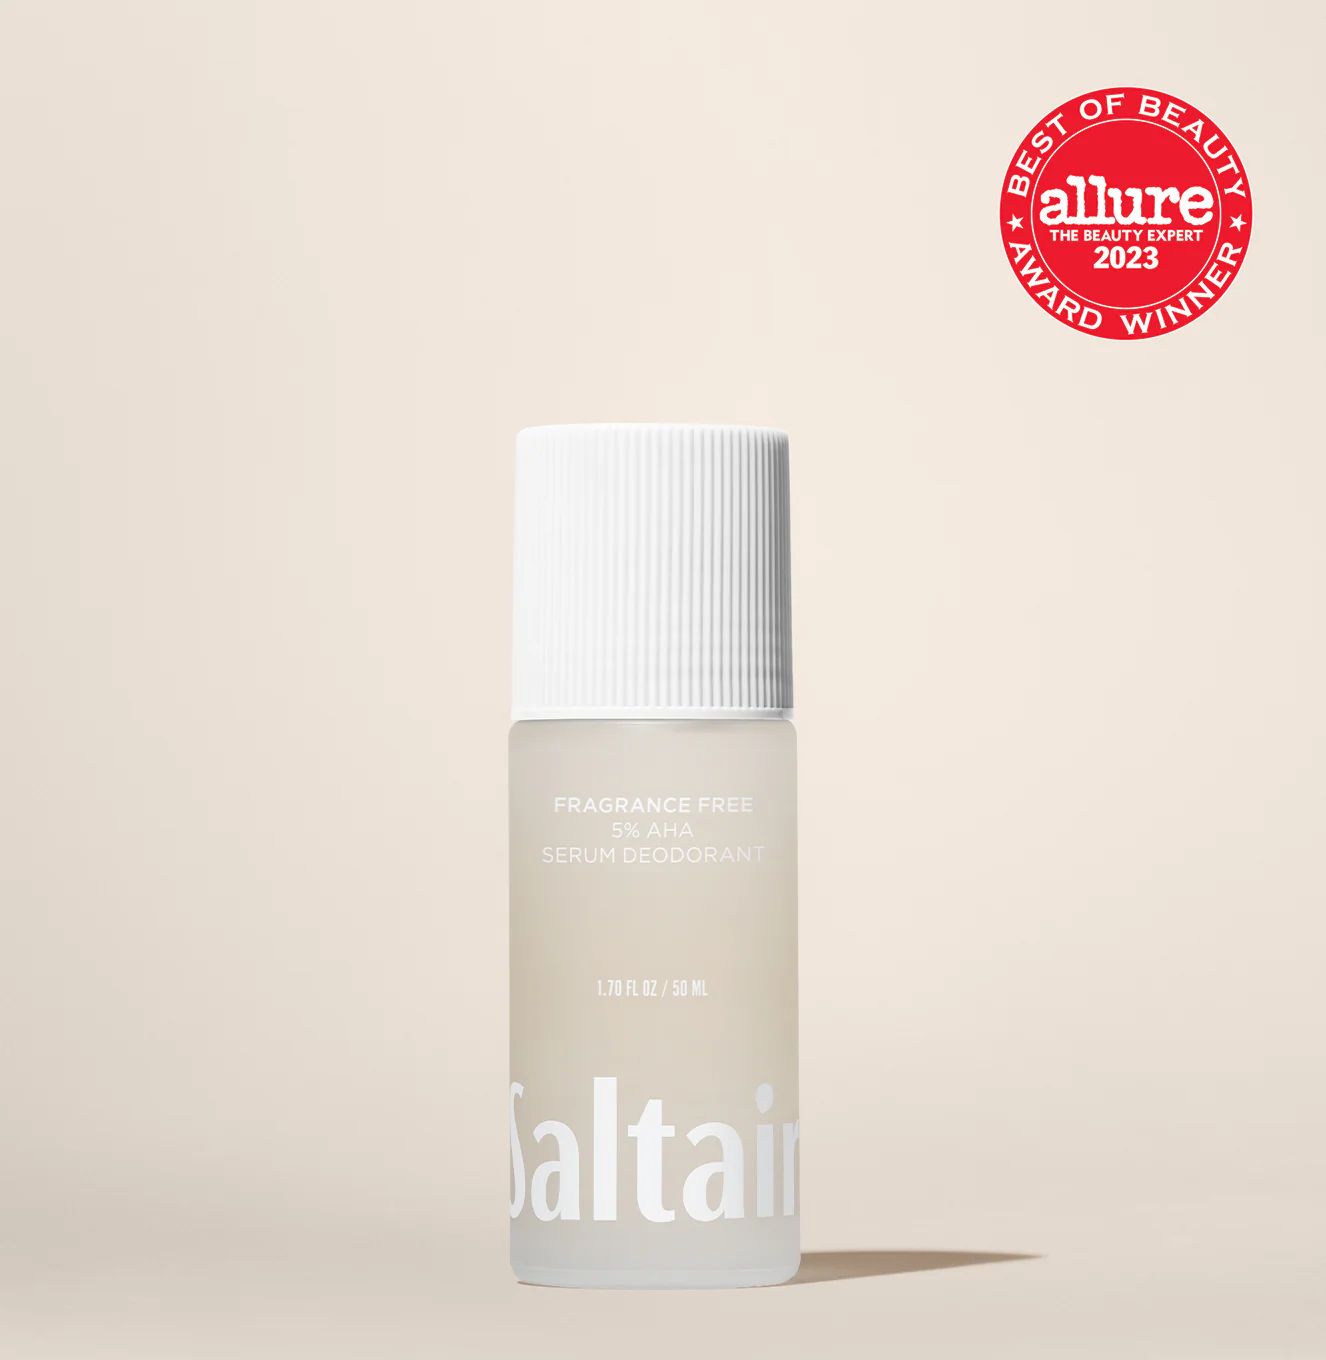 Fragrance Free Serum Deodorant With 5% AHA | Saltair | Saltair